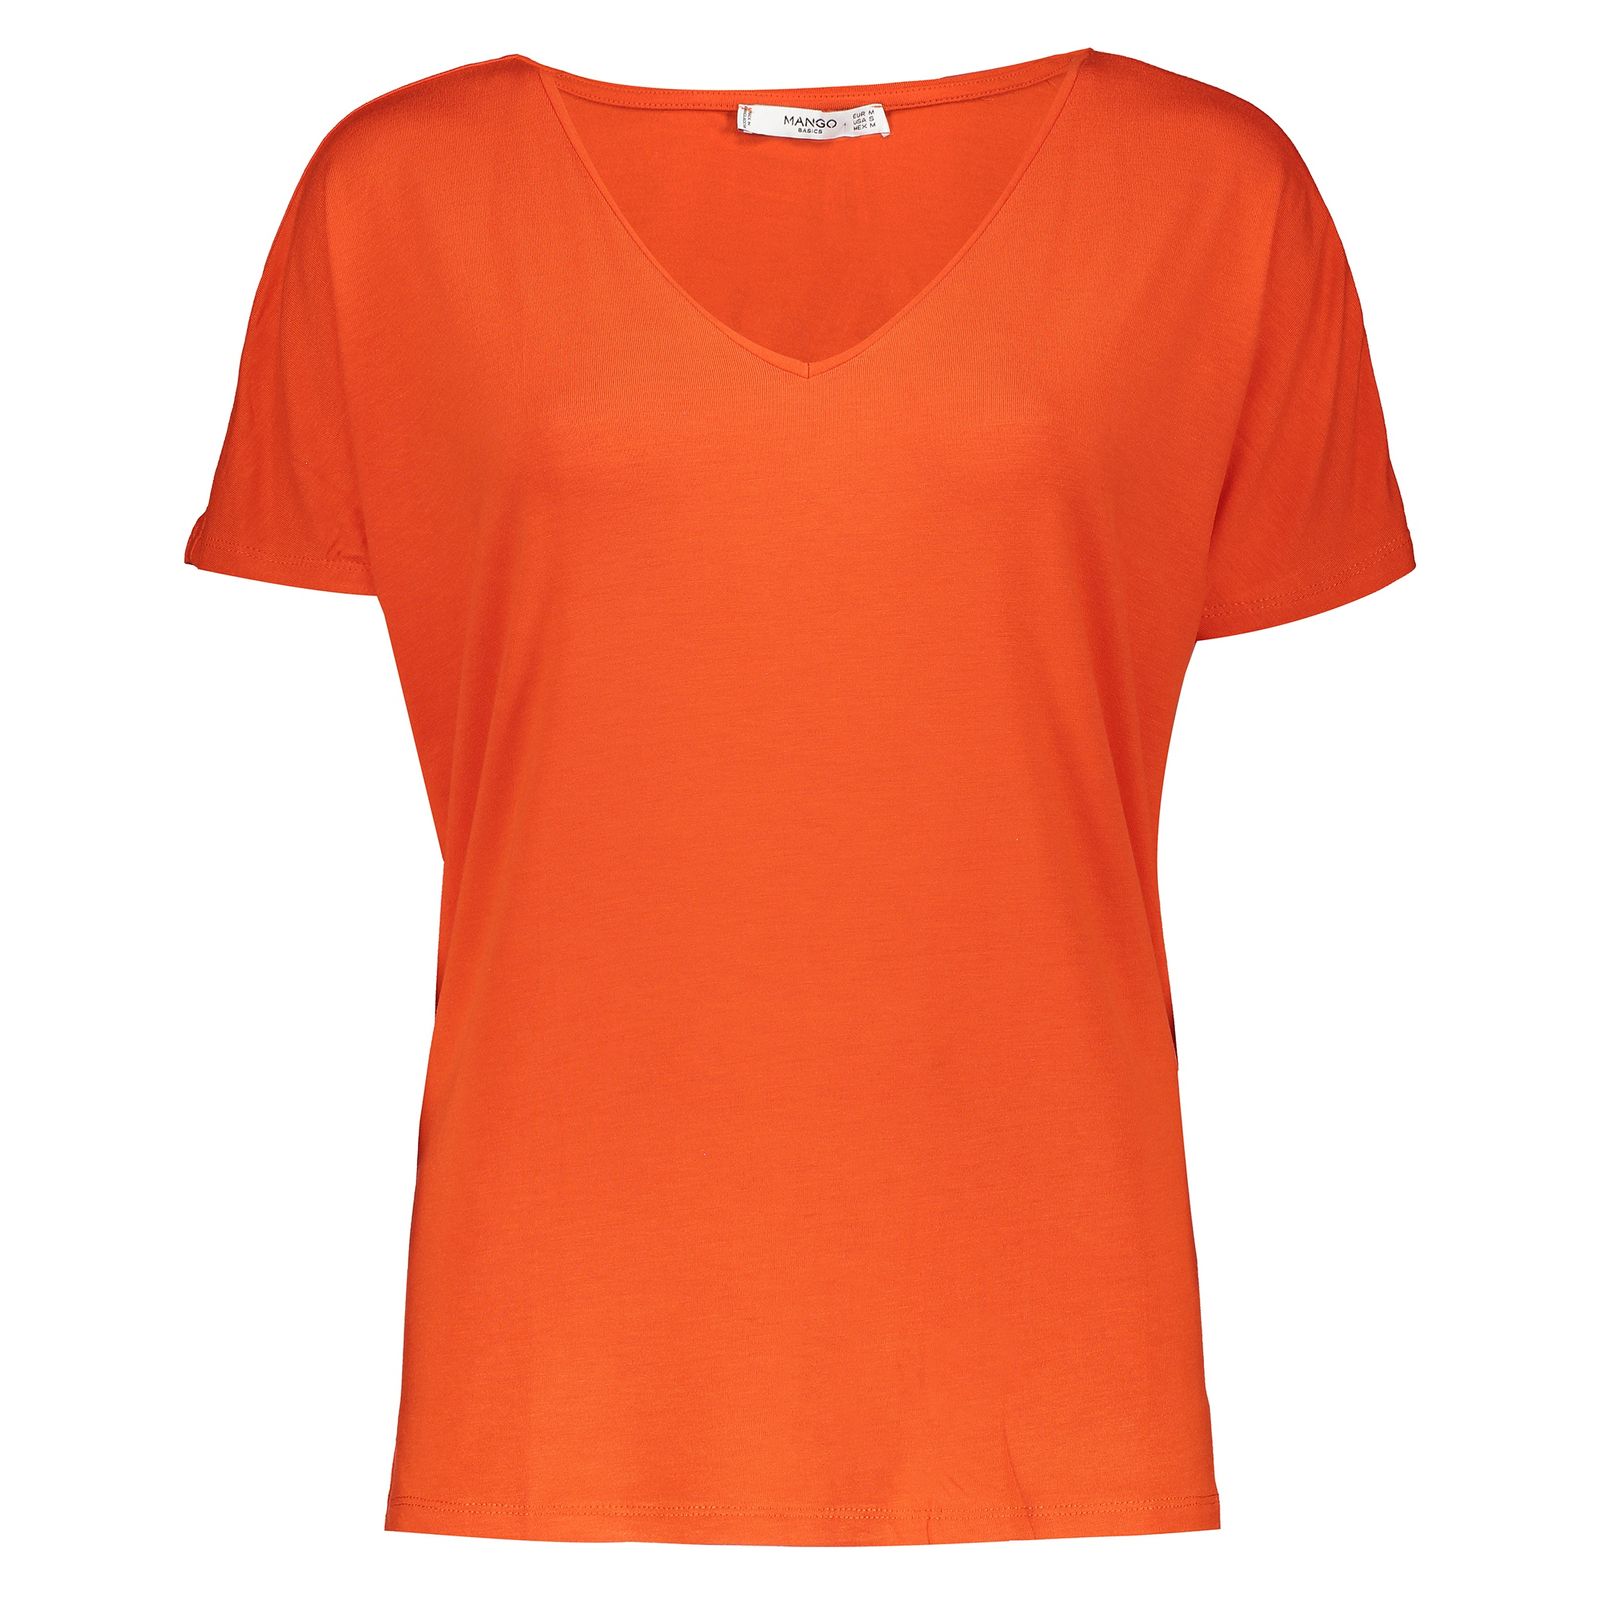 تی شرت ویسکوز یقه هفت زنانه - مانگو - نارنجی - 1